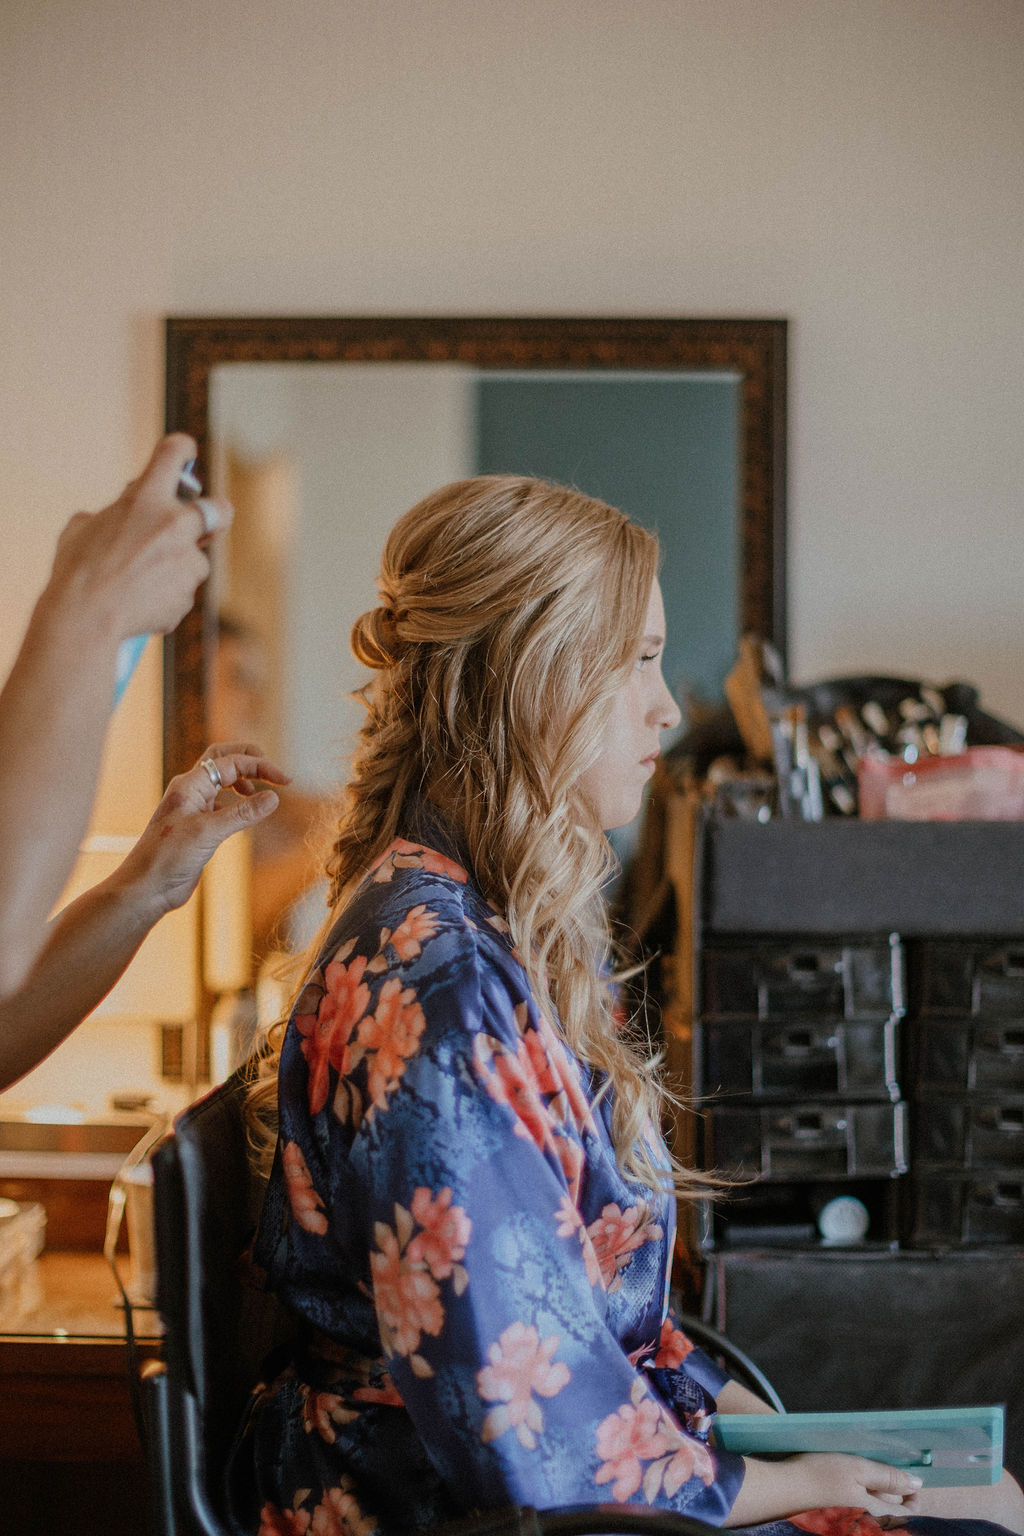 the hairdresser spraying the bride's hair